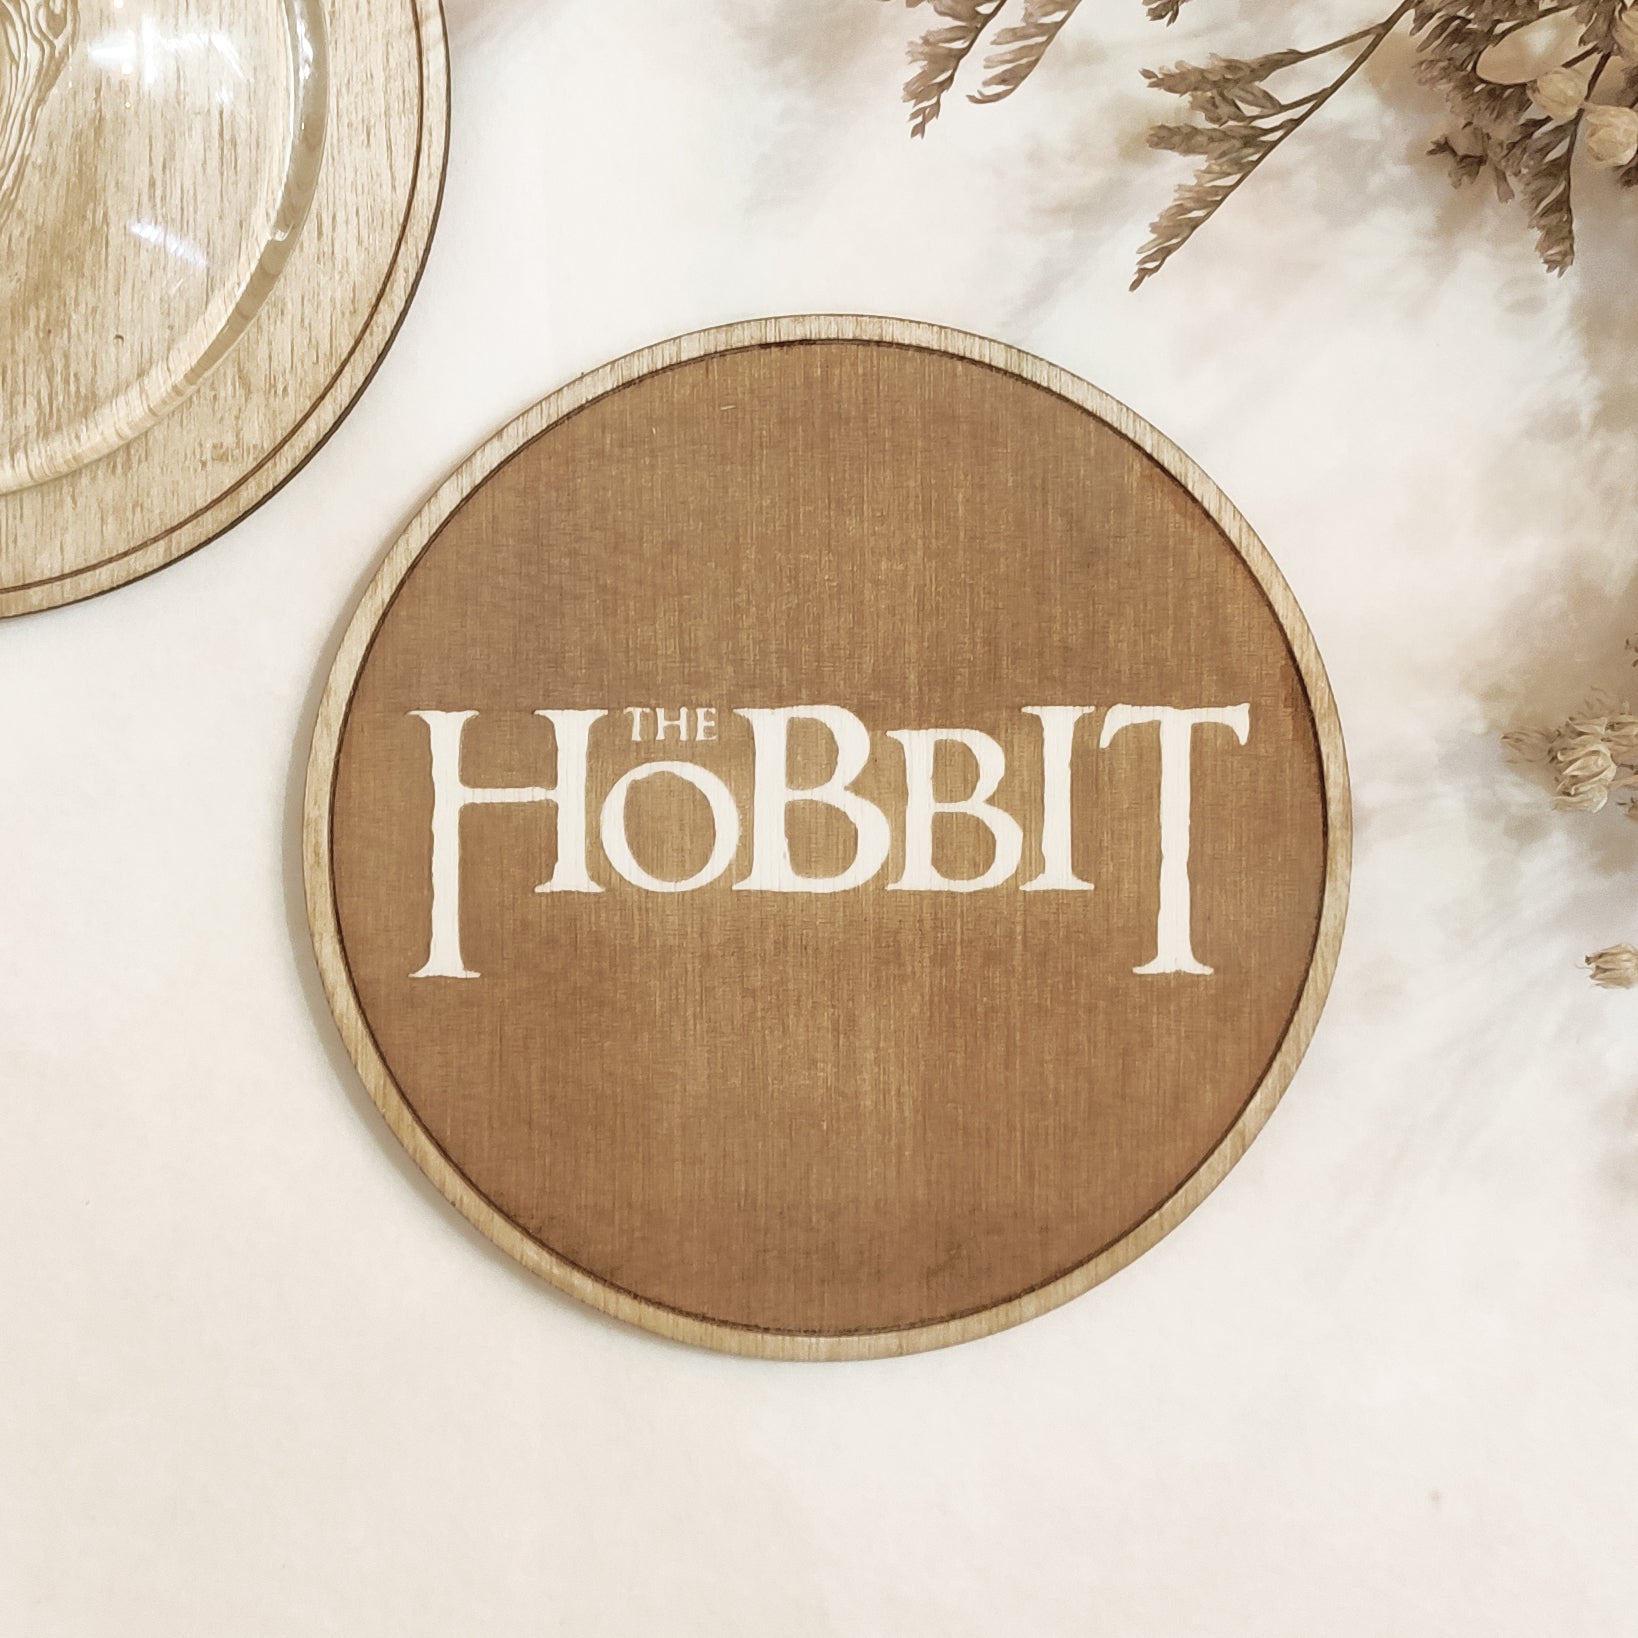 Set of 6 The Hobbit Wooden Coasters - Handmade Gift - Housewarming - Wood Kitchenware-8